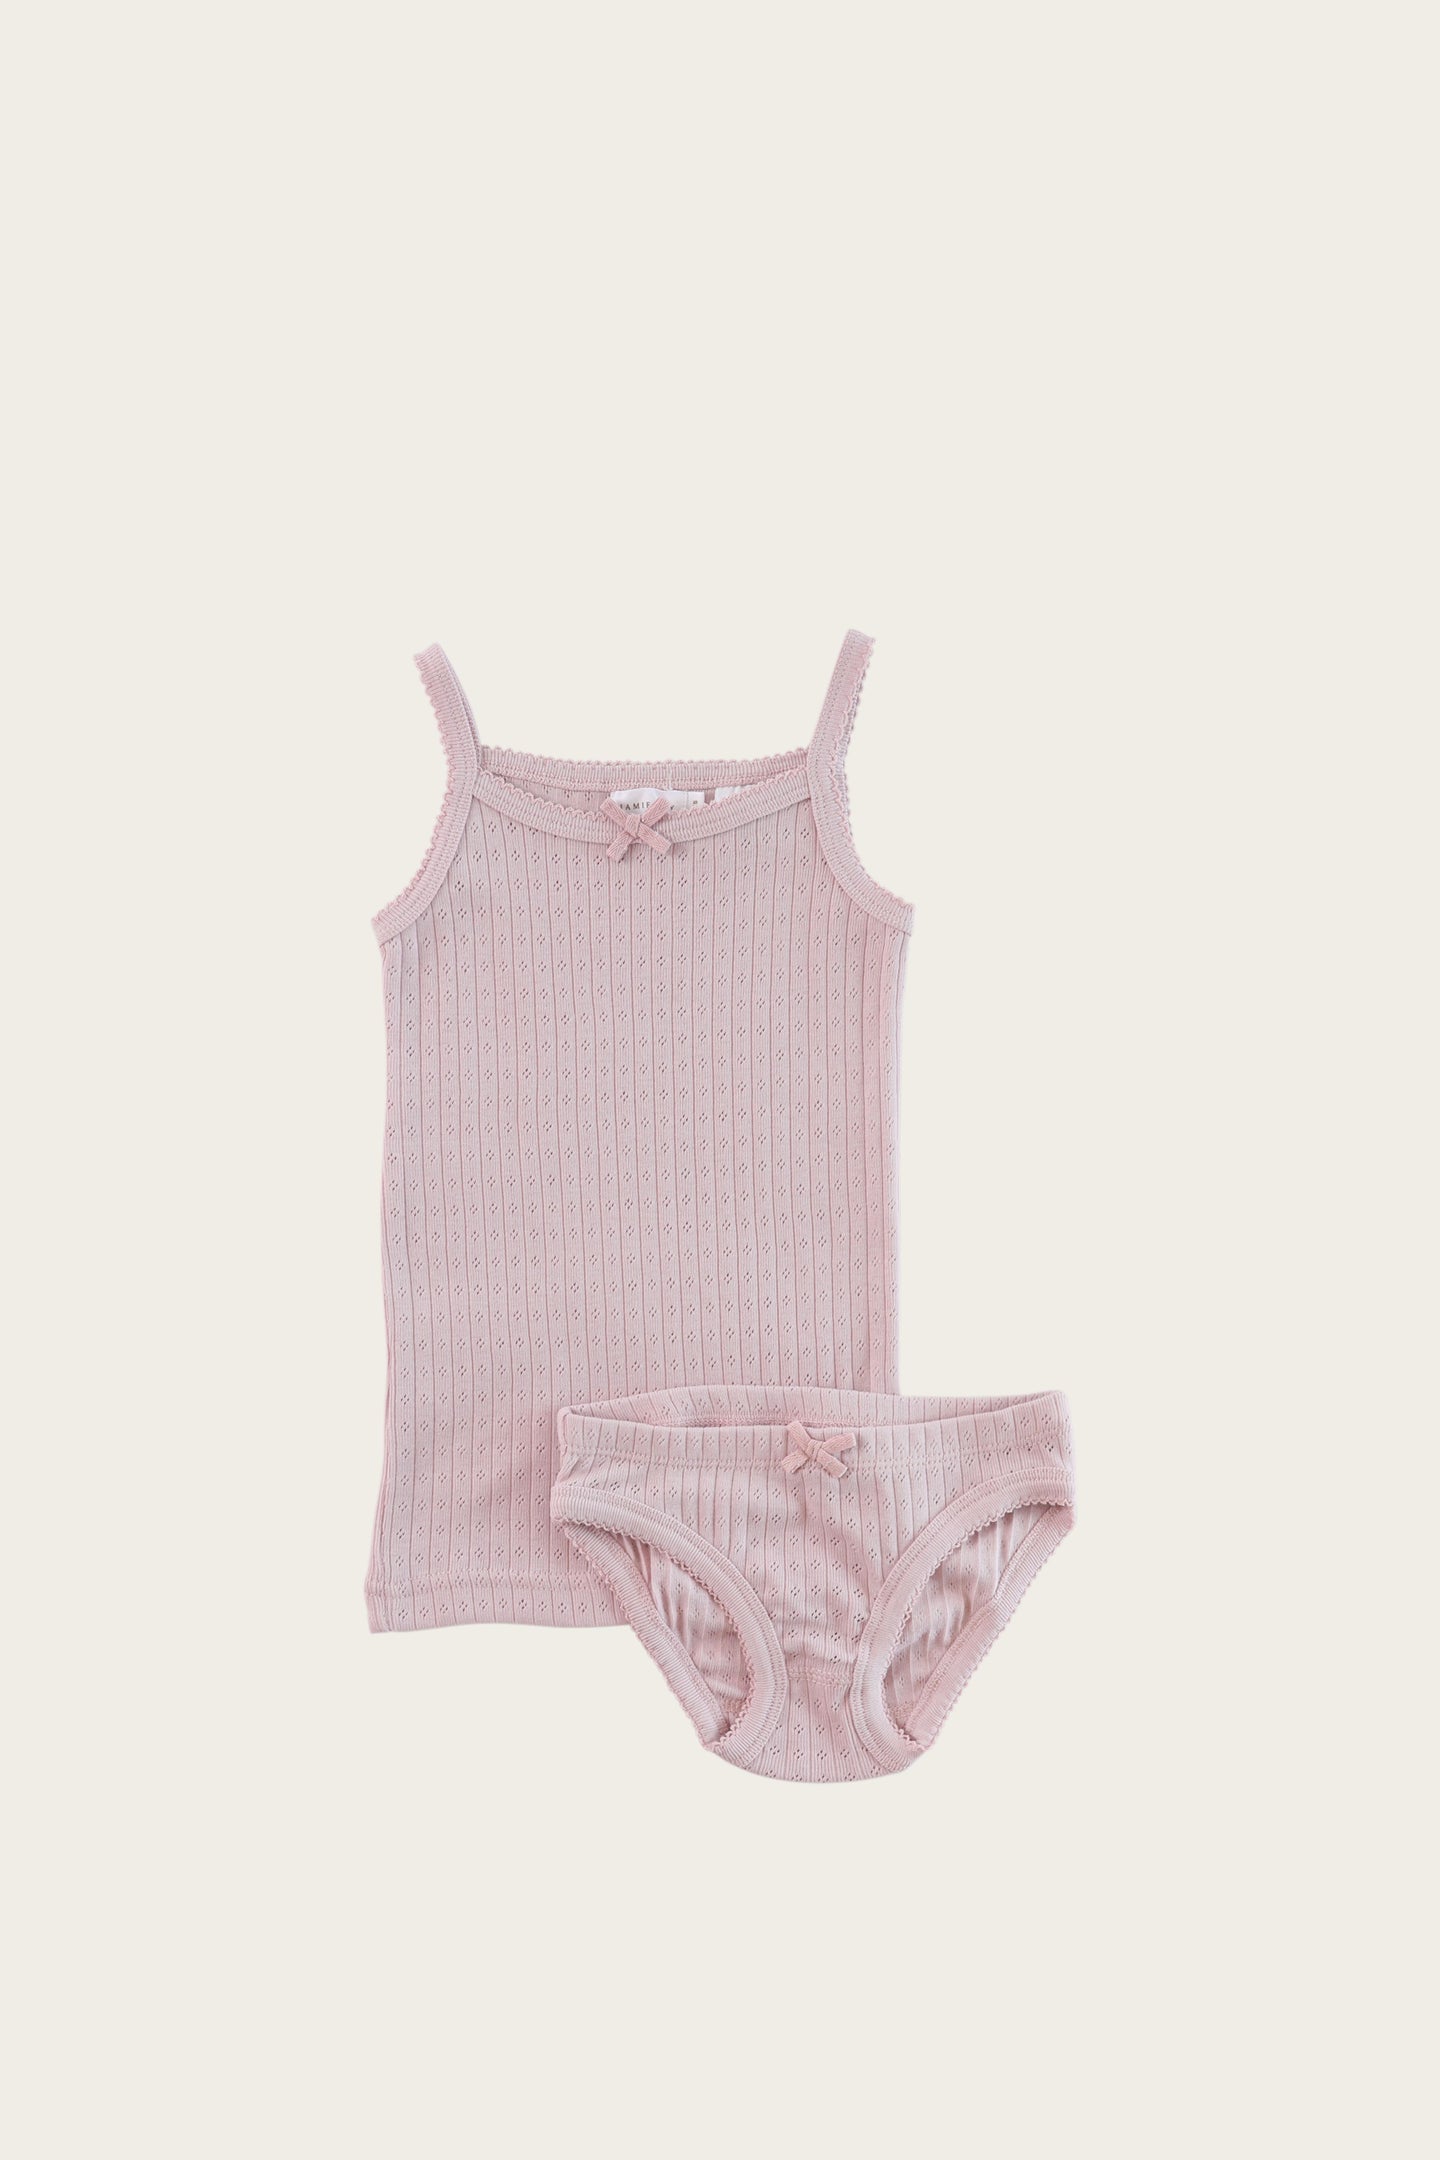 Jamie Kay - Organic Pointelle Underwear Set - Old Rose